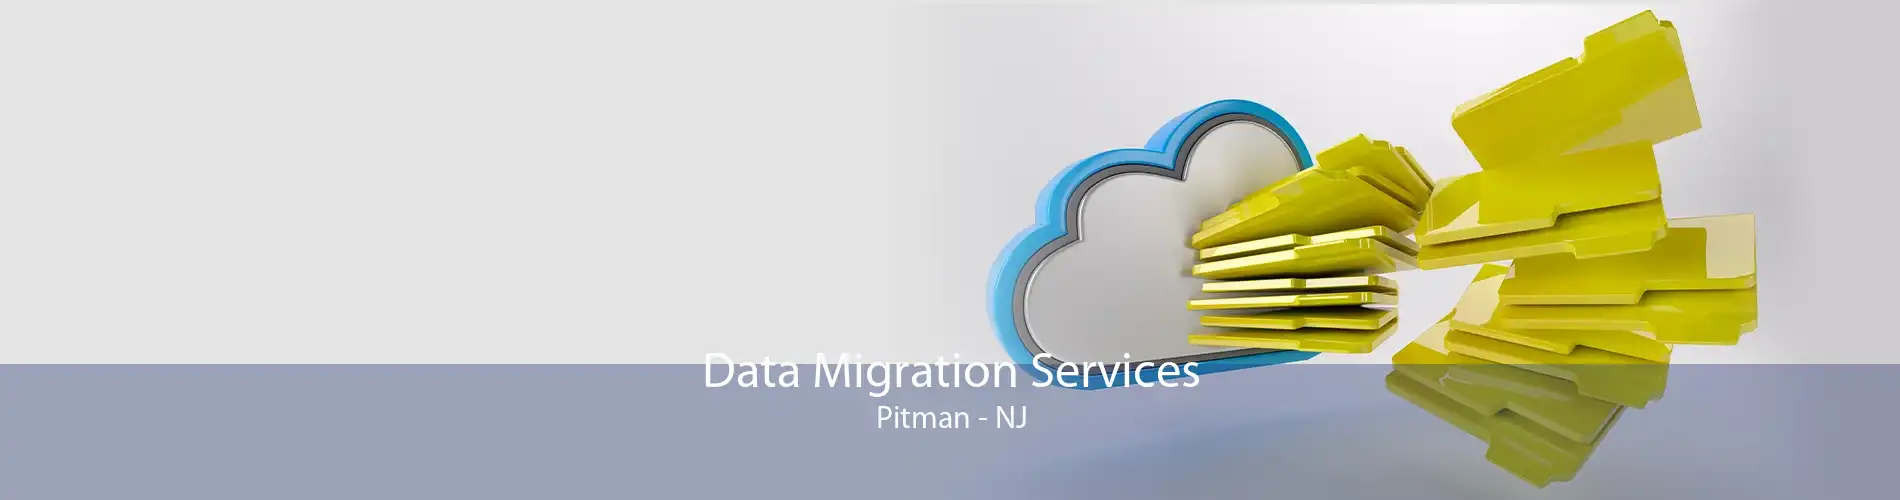 Data Migration Services Pitman - NJ